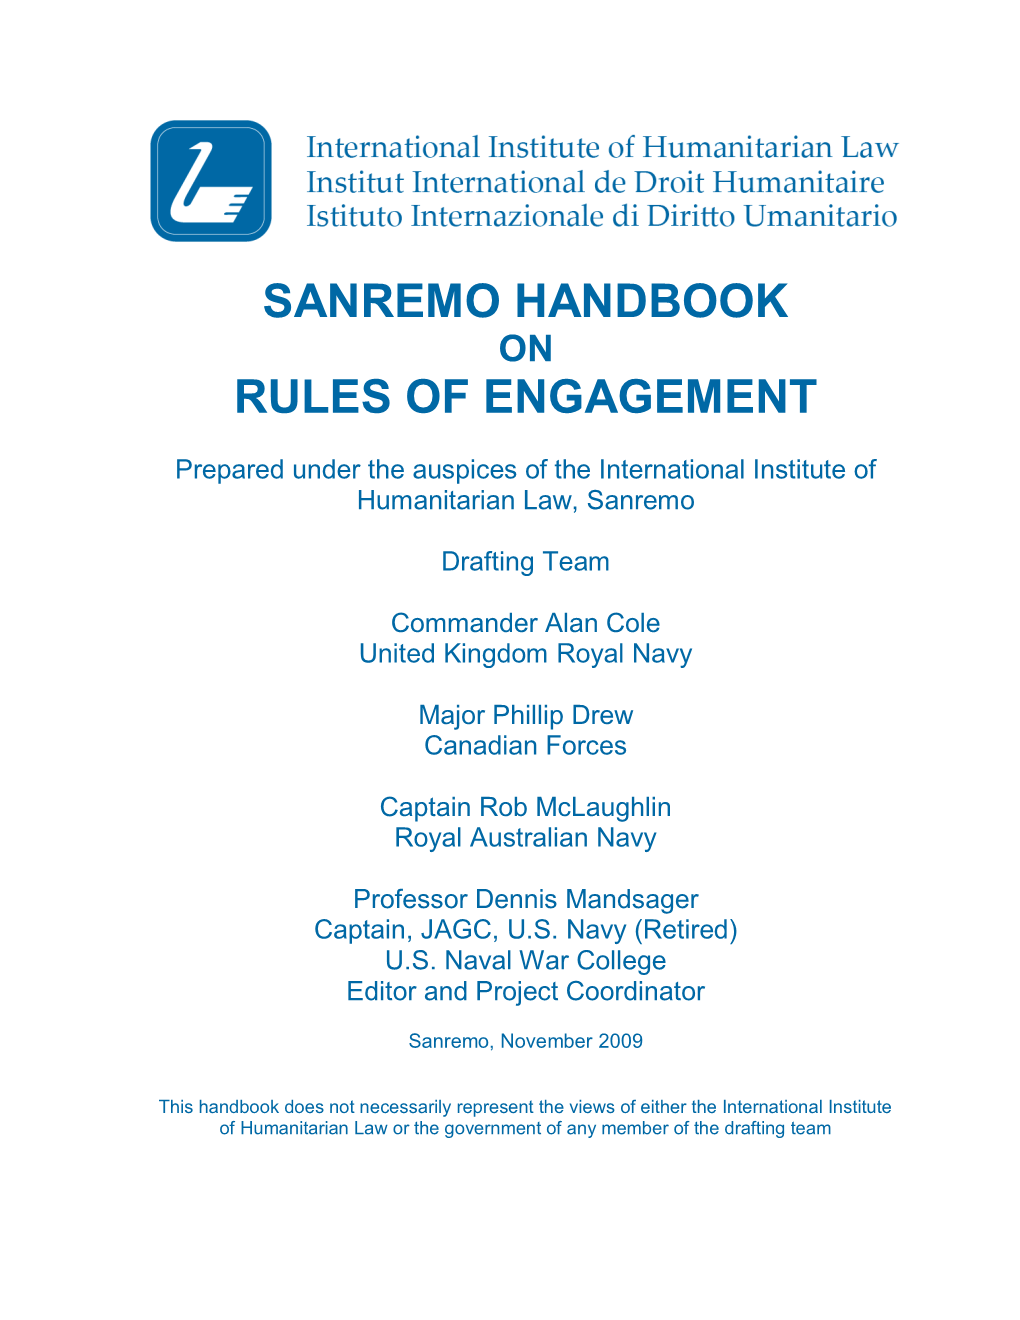 Sanremo Handbook Rules of Engagement